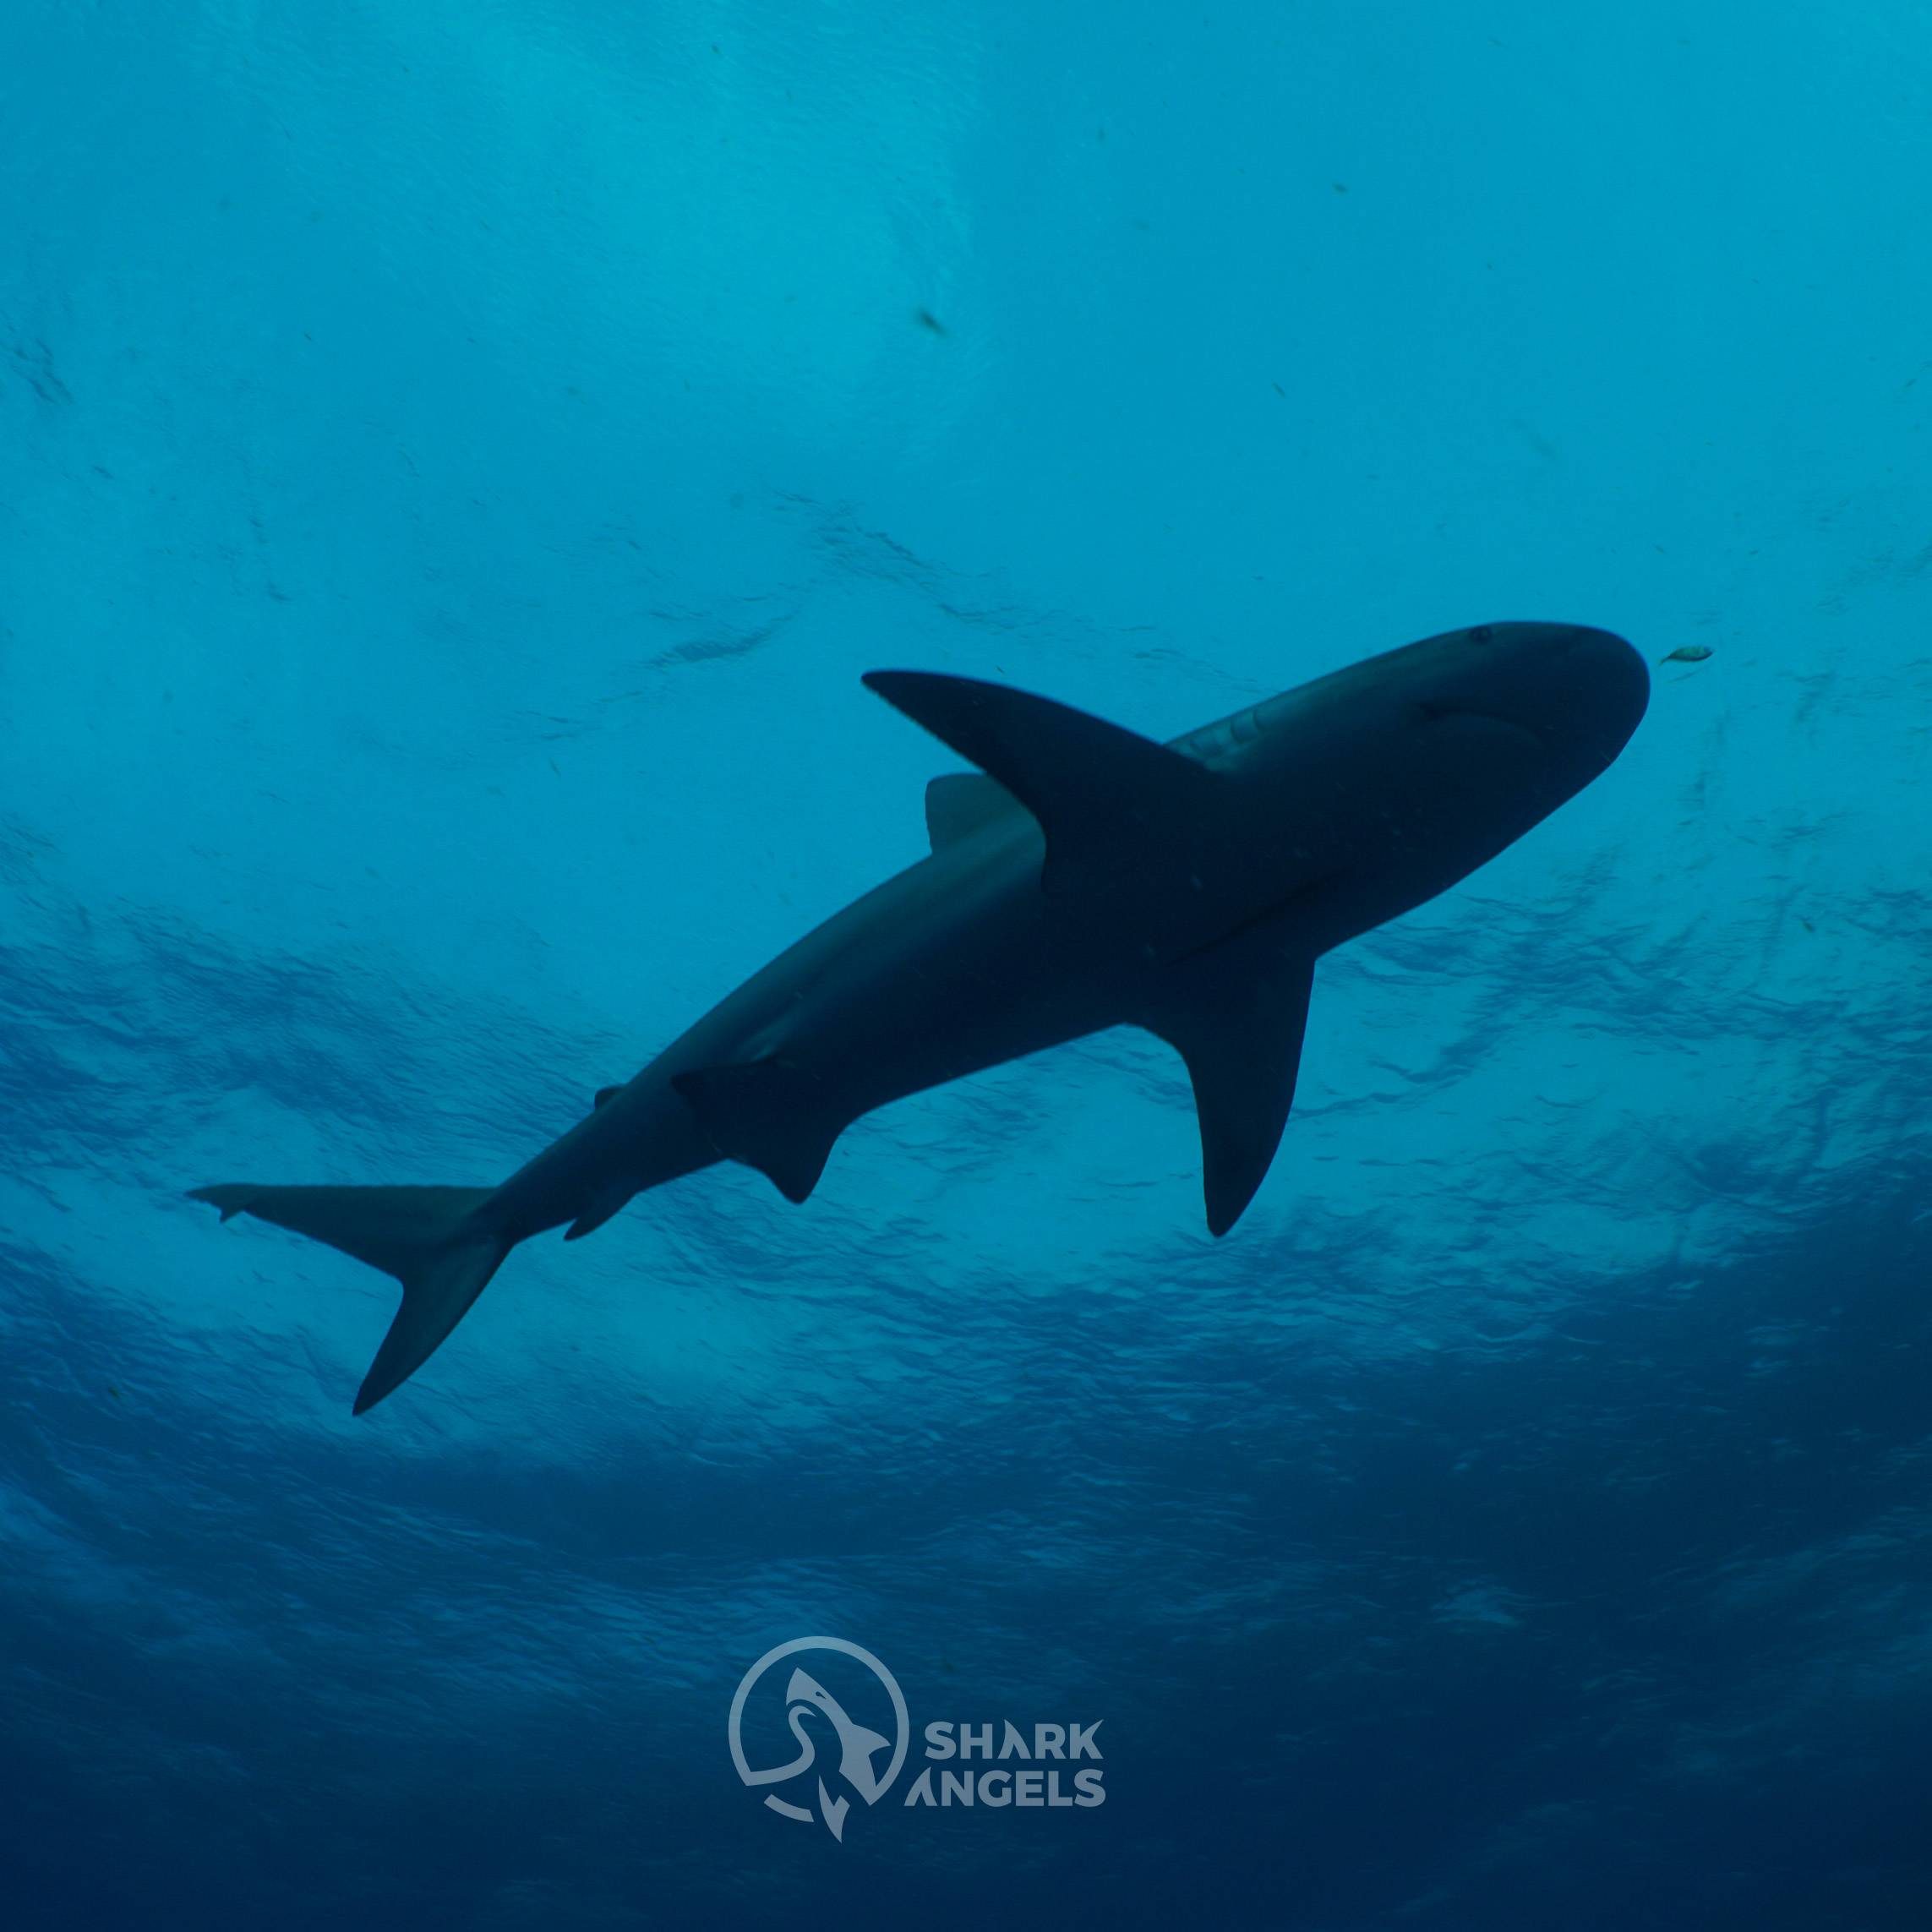 Underwater shark picture - shark conservation.